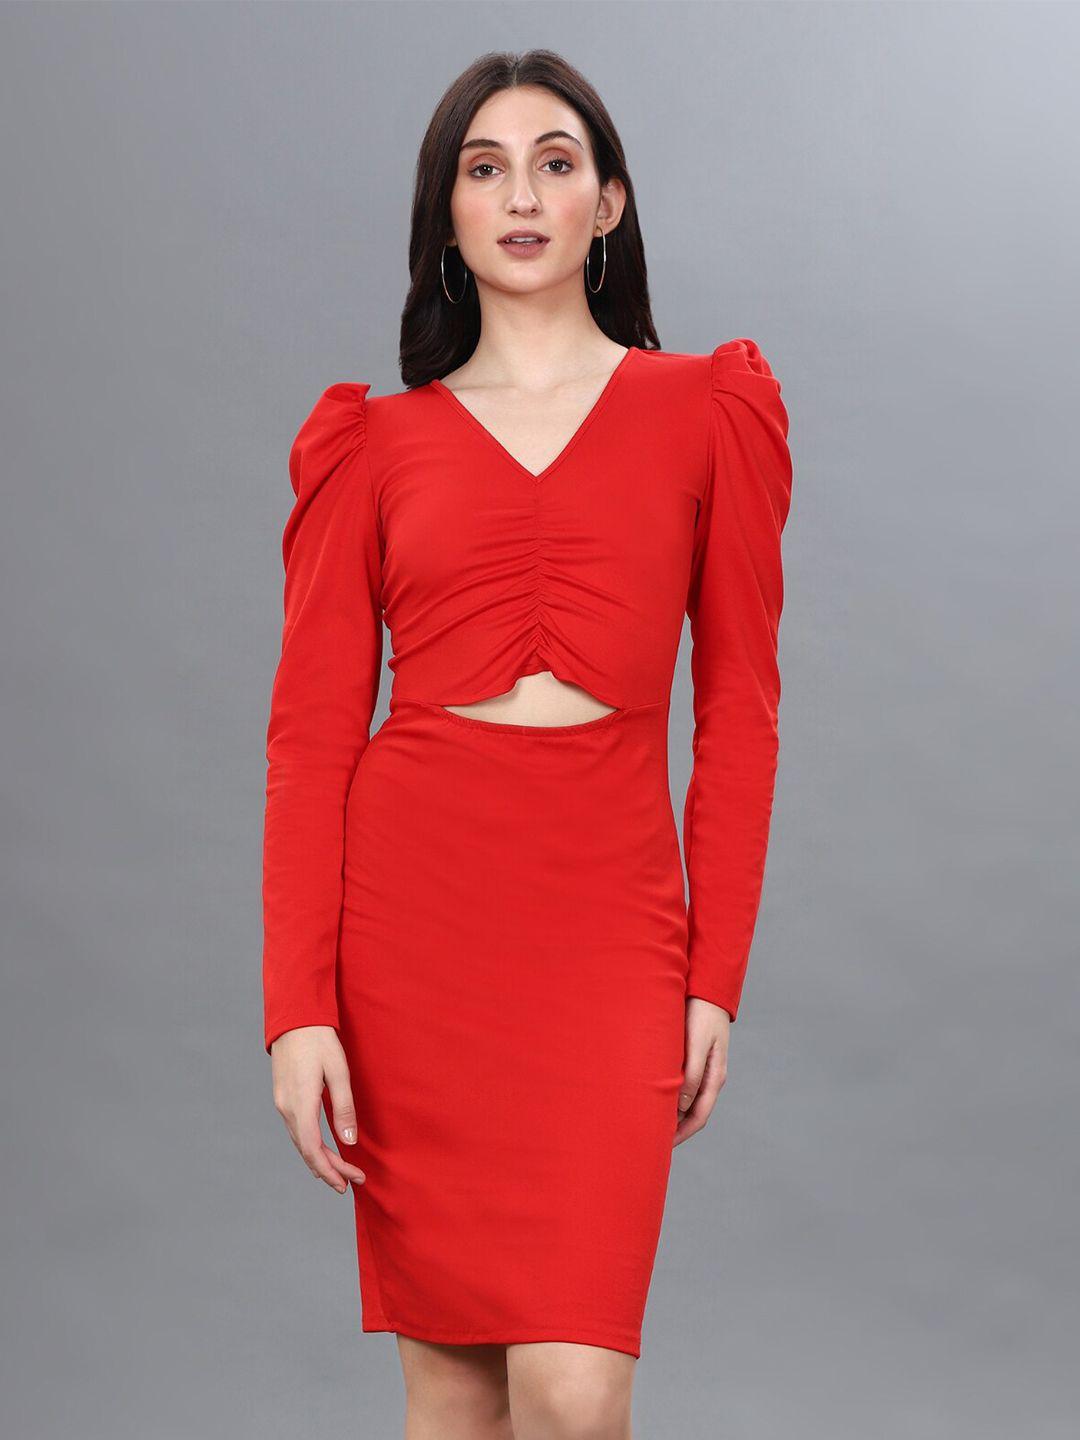 westhood red sheath dress